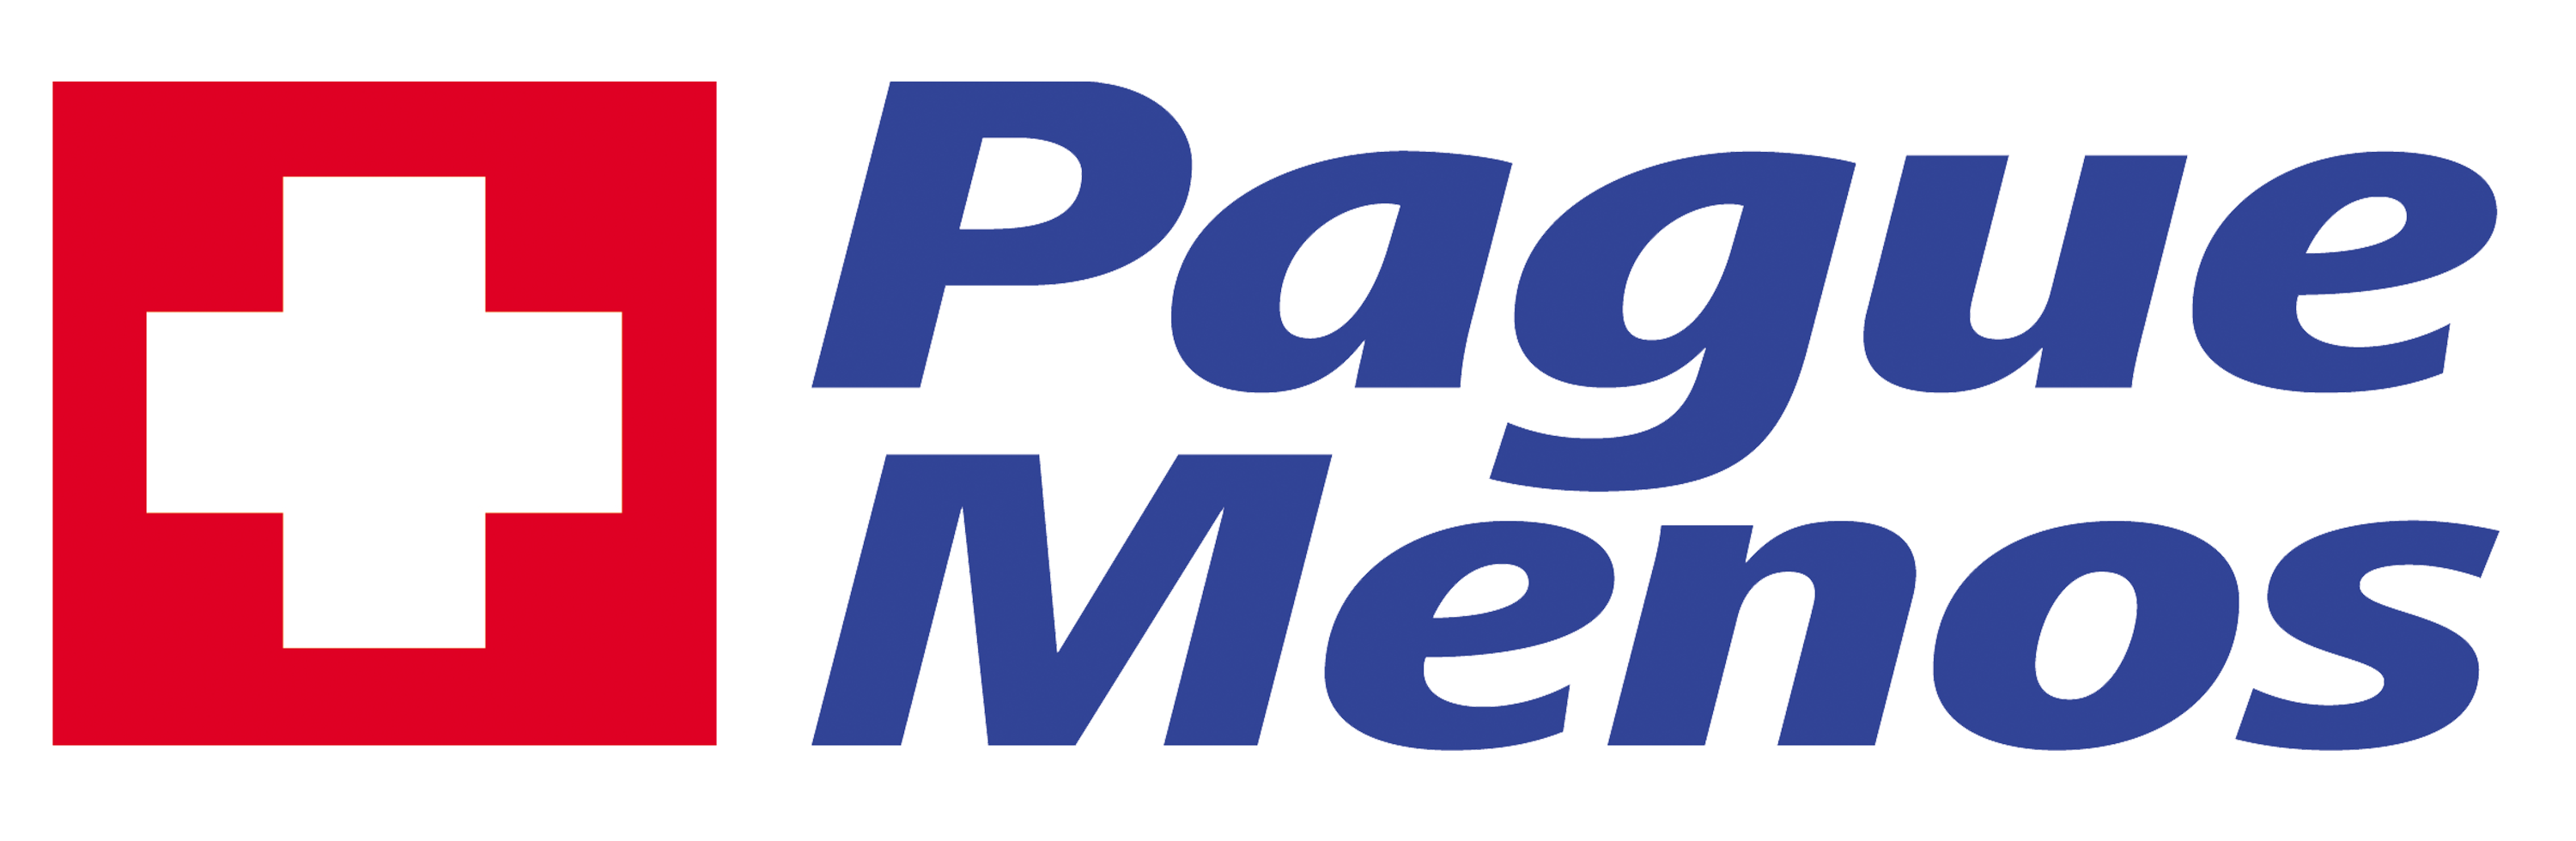 Farmacia Pague Menos - Guanandi - MS